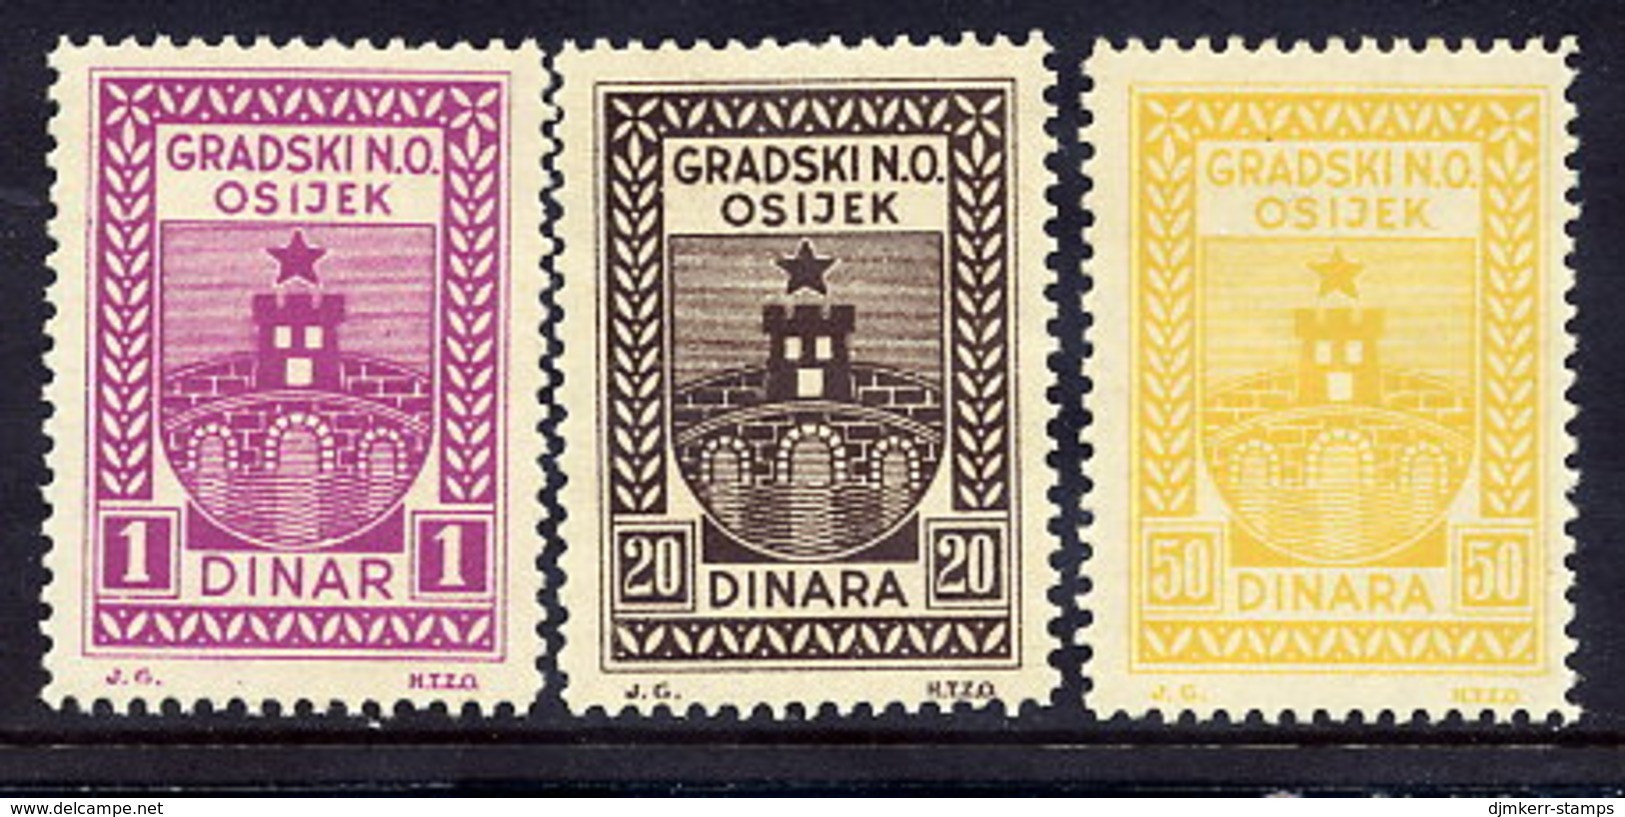 CROATIA Fiscal Stamps For Municipality Of Osijek 1, 20, 50 Dinar MNH / ** - Croatie